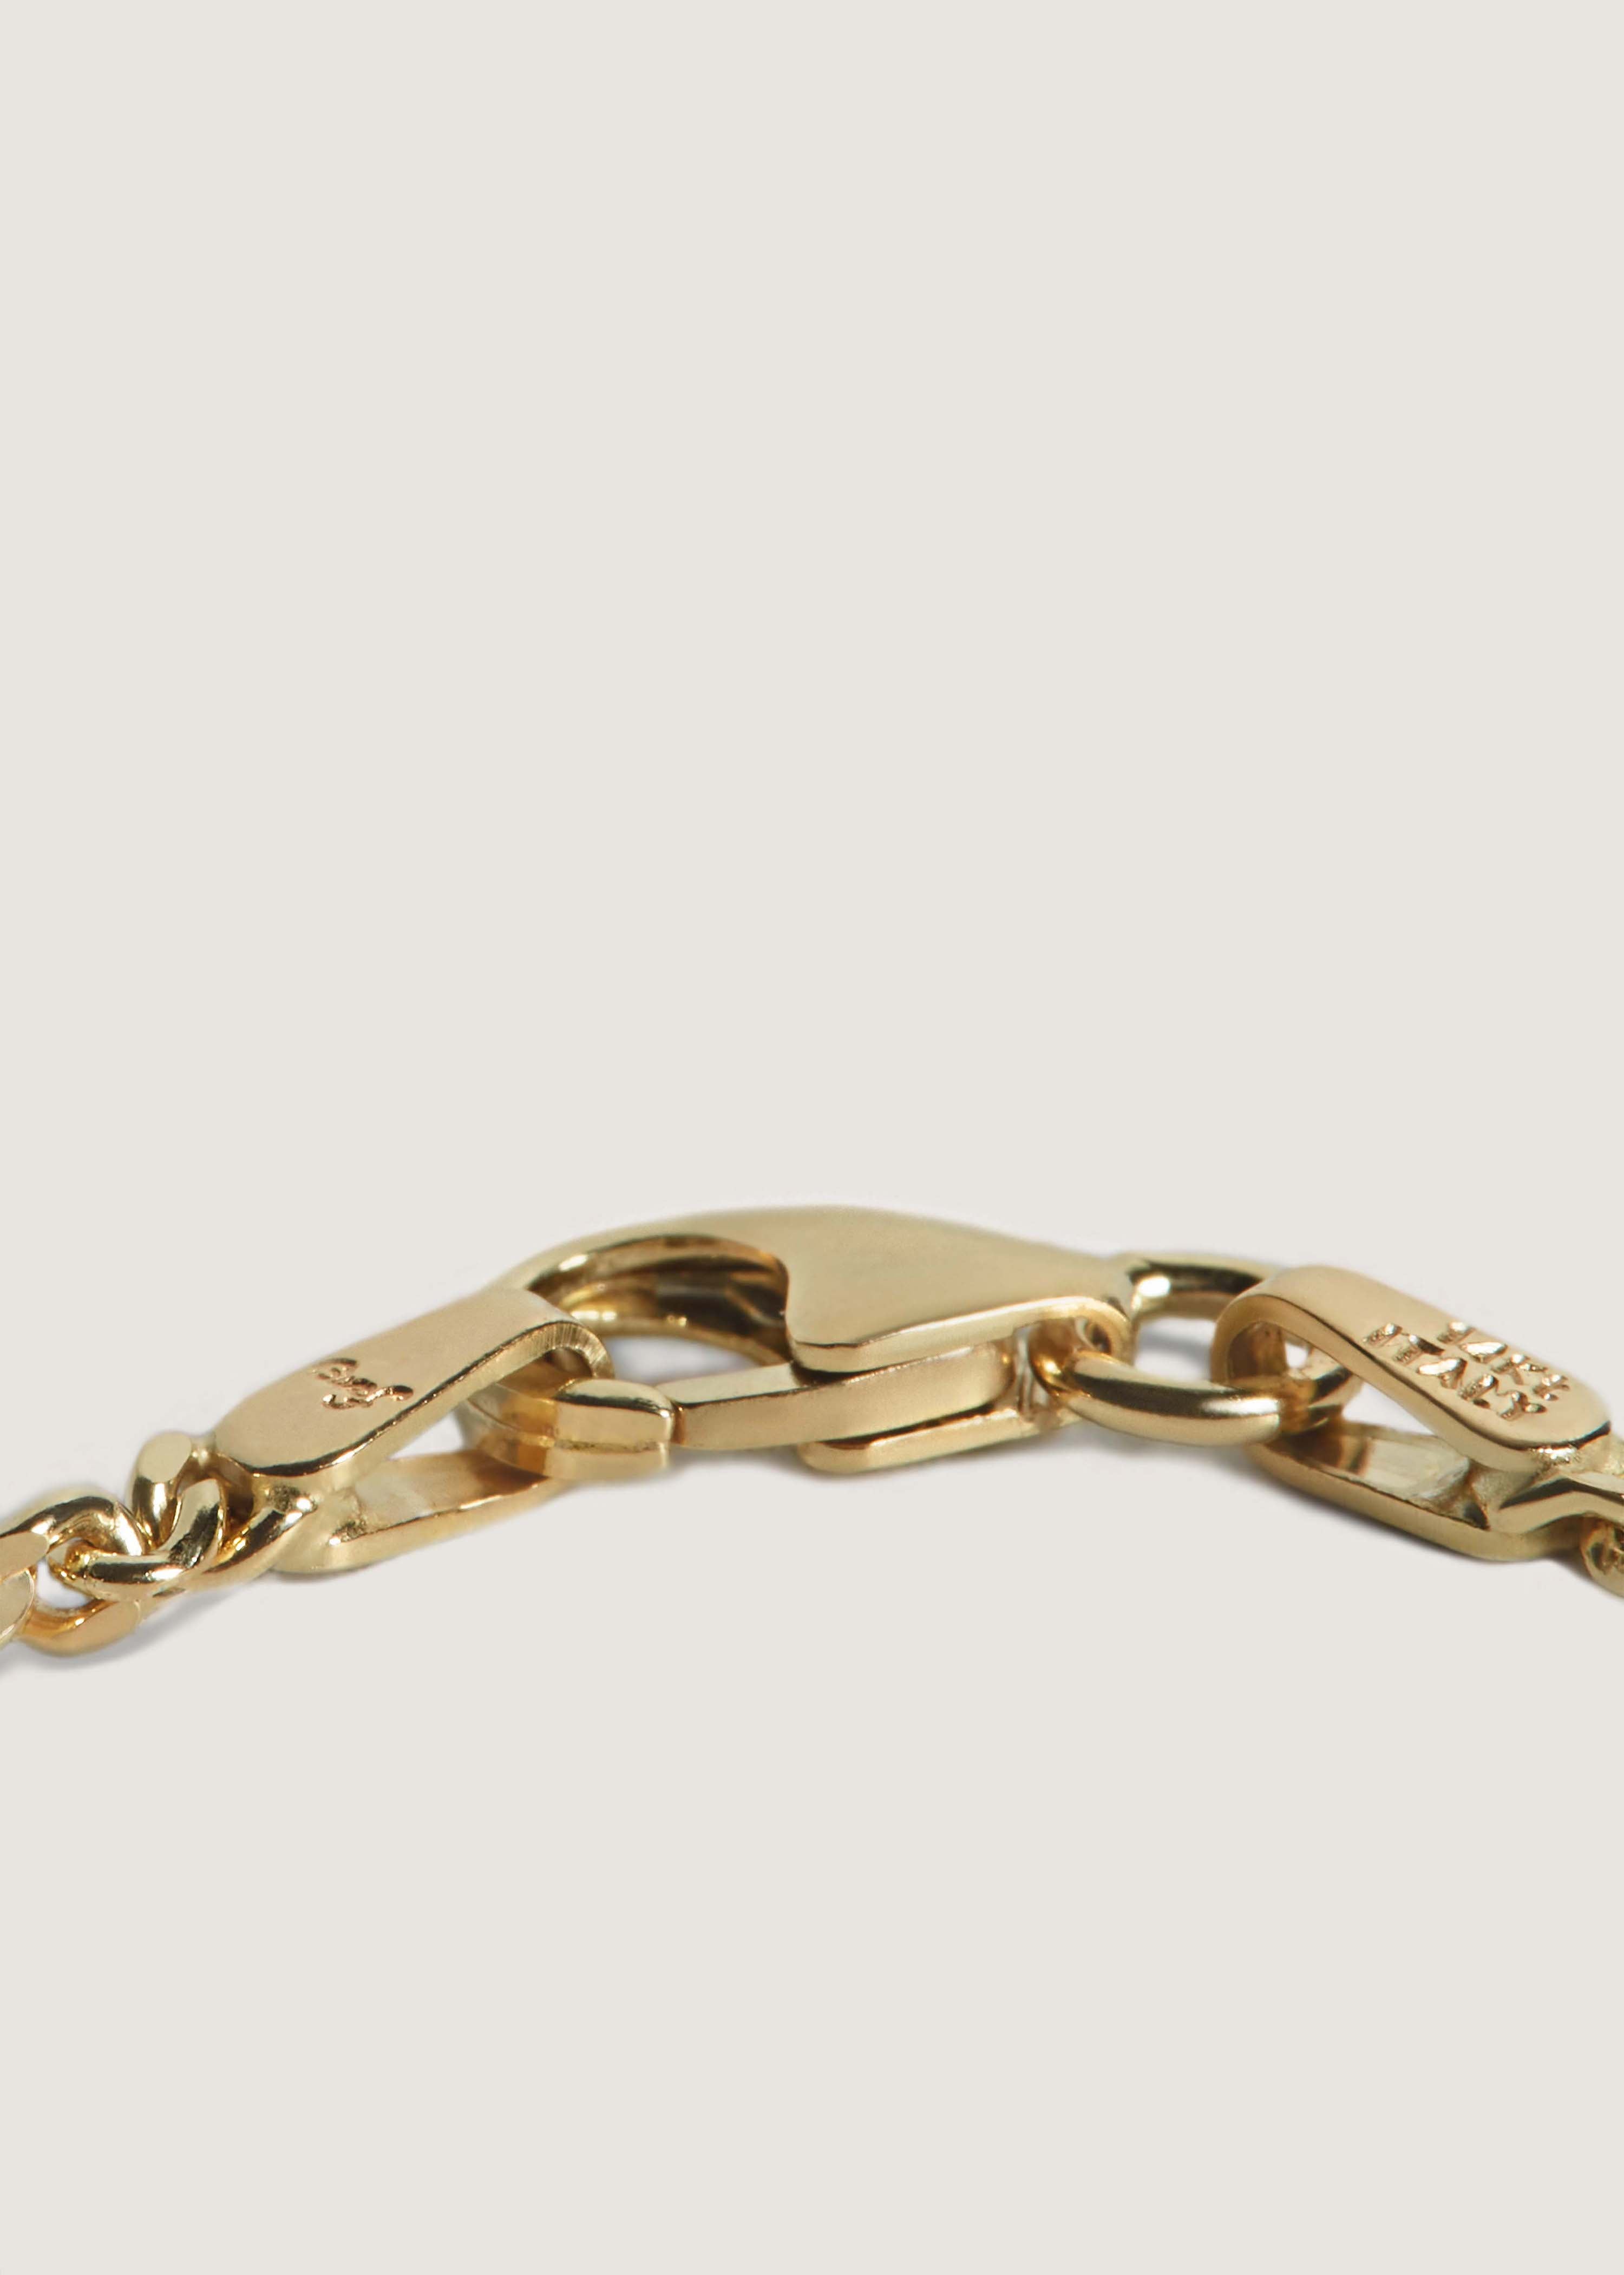 alt="clasp of Capri Curb Chain Necklace III"